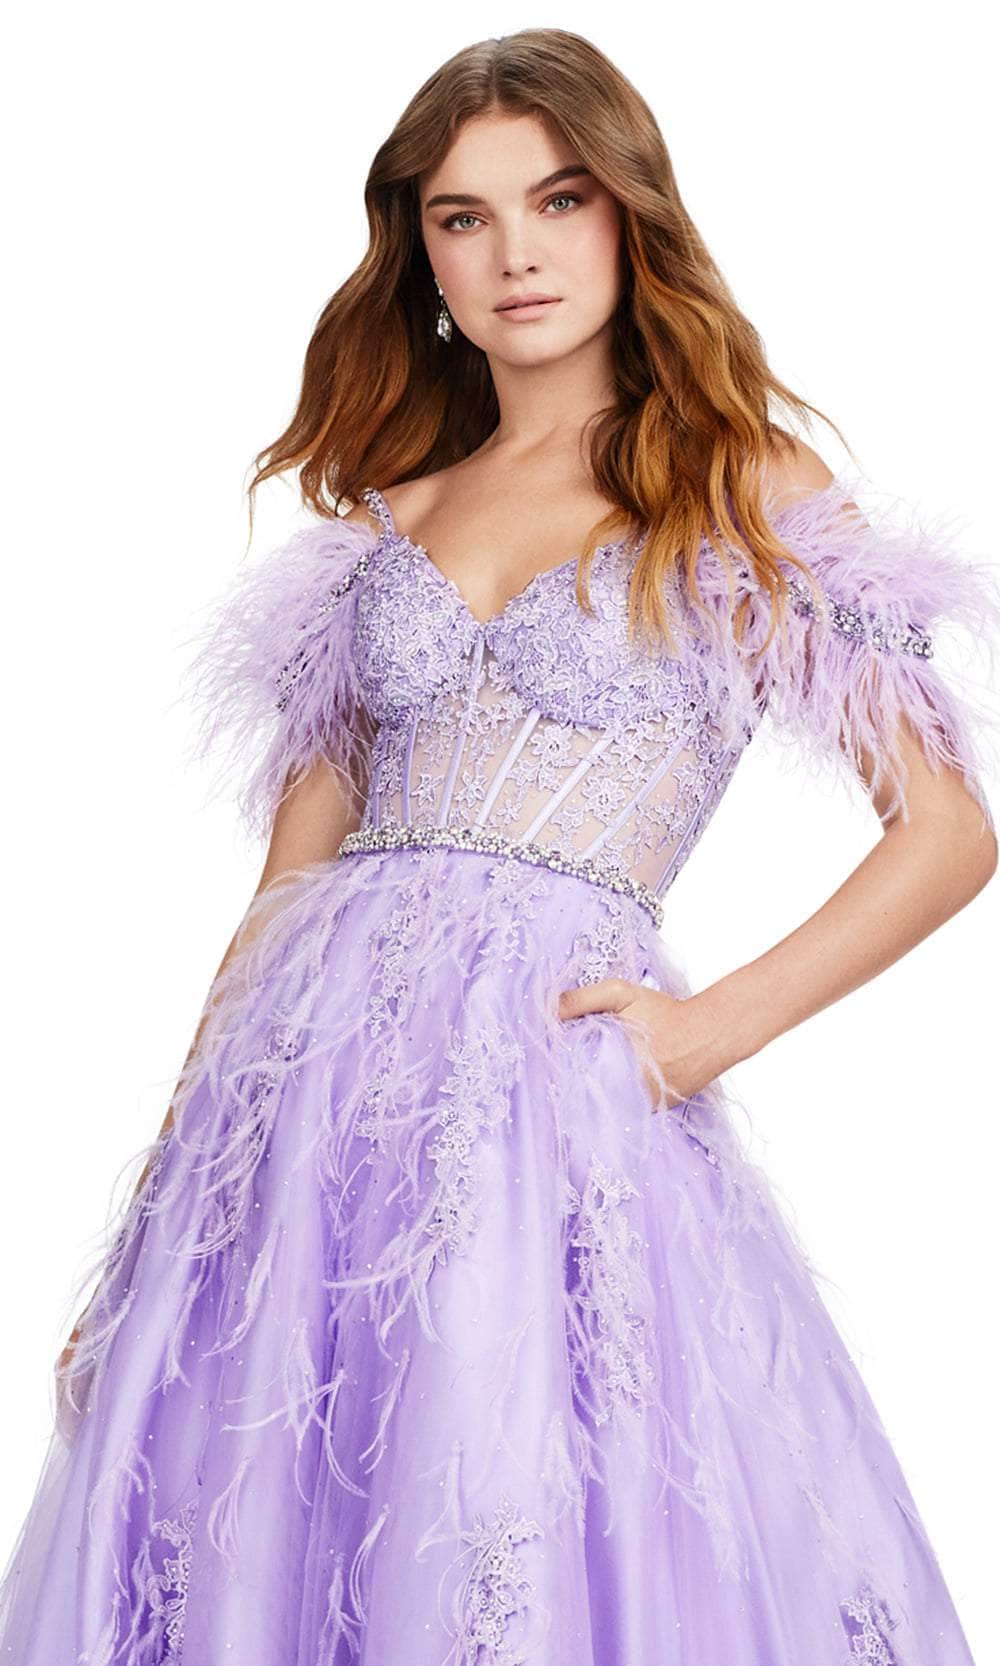 Ashley Lauren 11447 - Beaded Lace Corset Evening Gown Evening Dresses